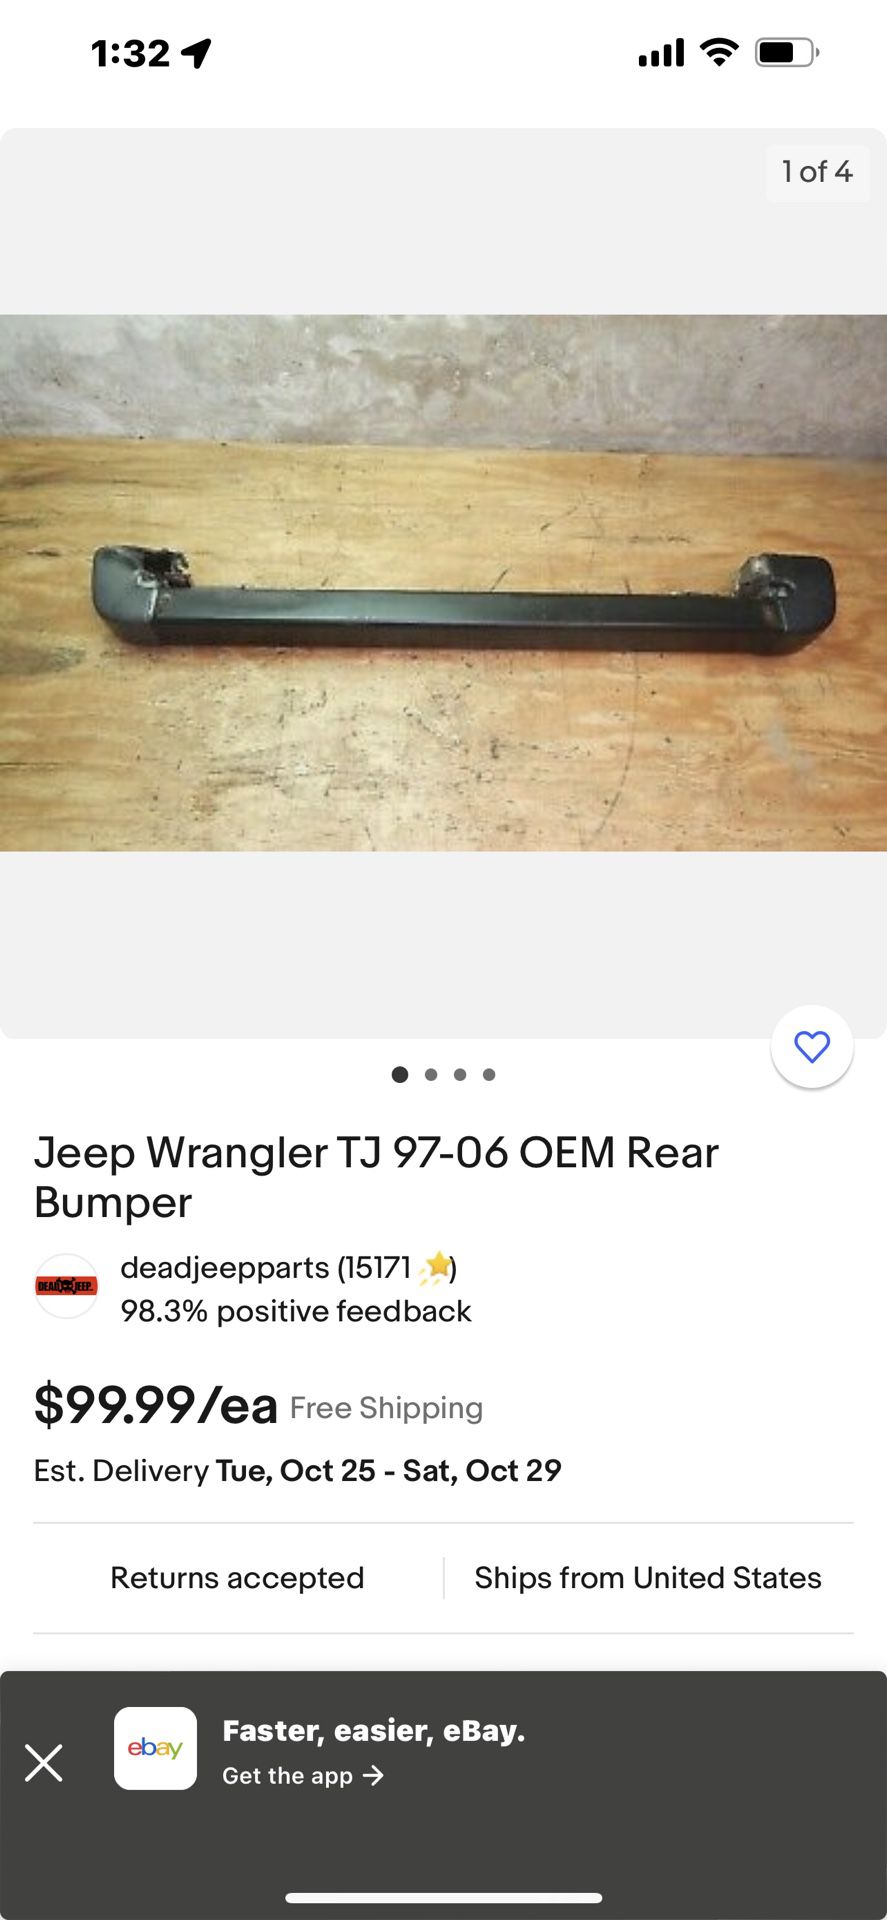 Oem Rear Bumper Jeep Wrangler 